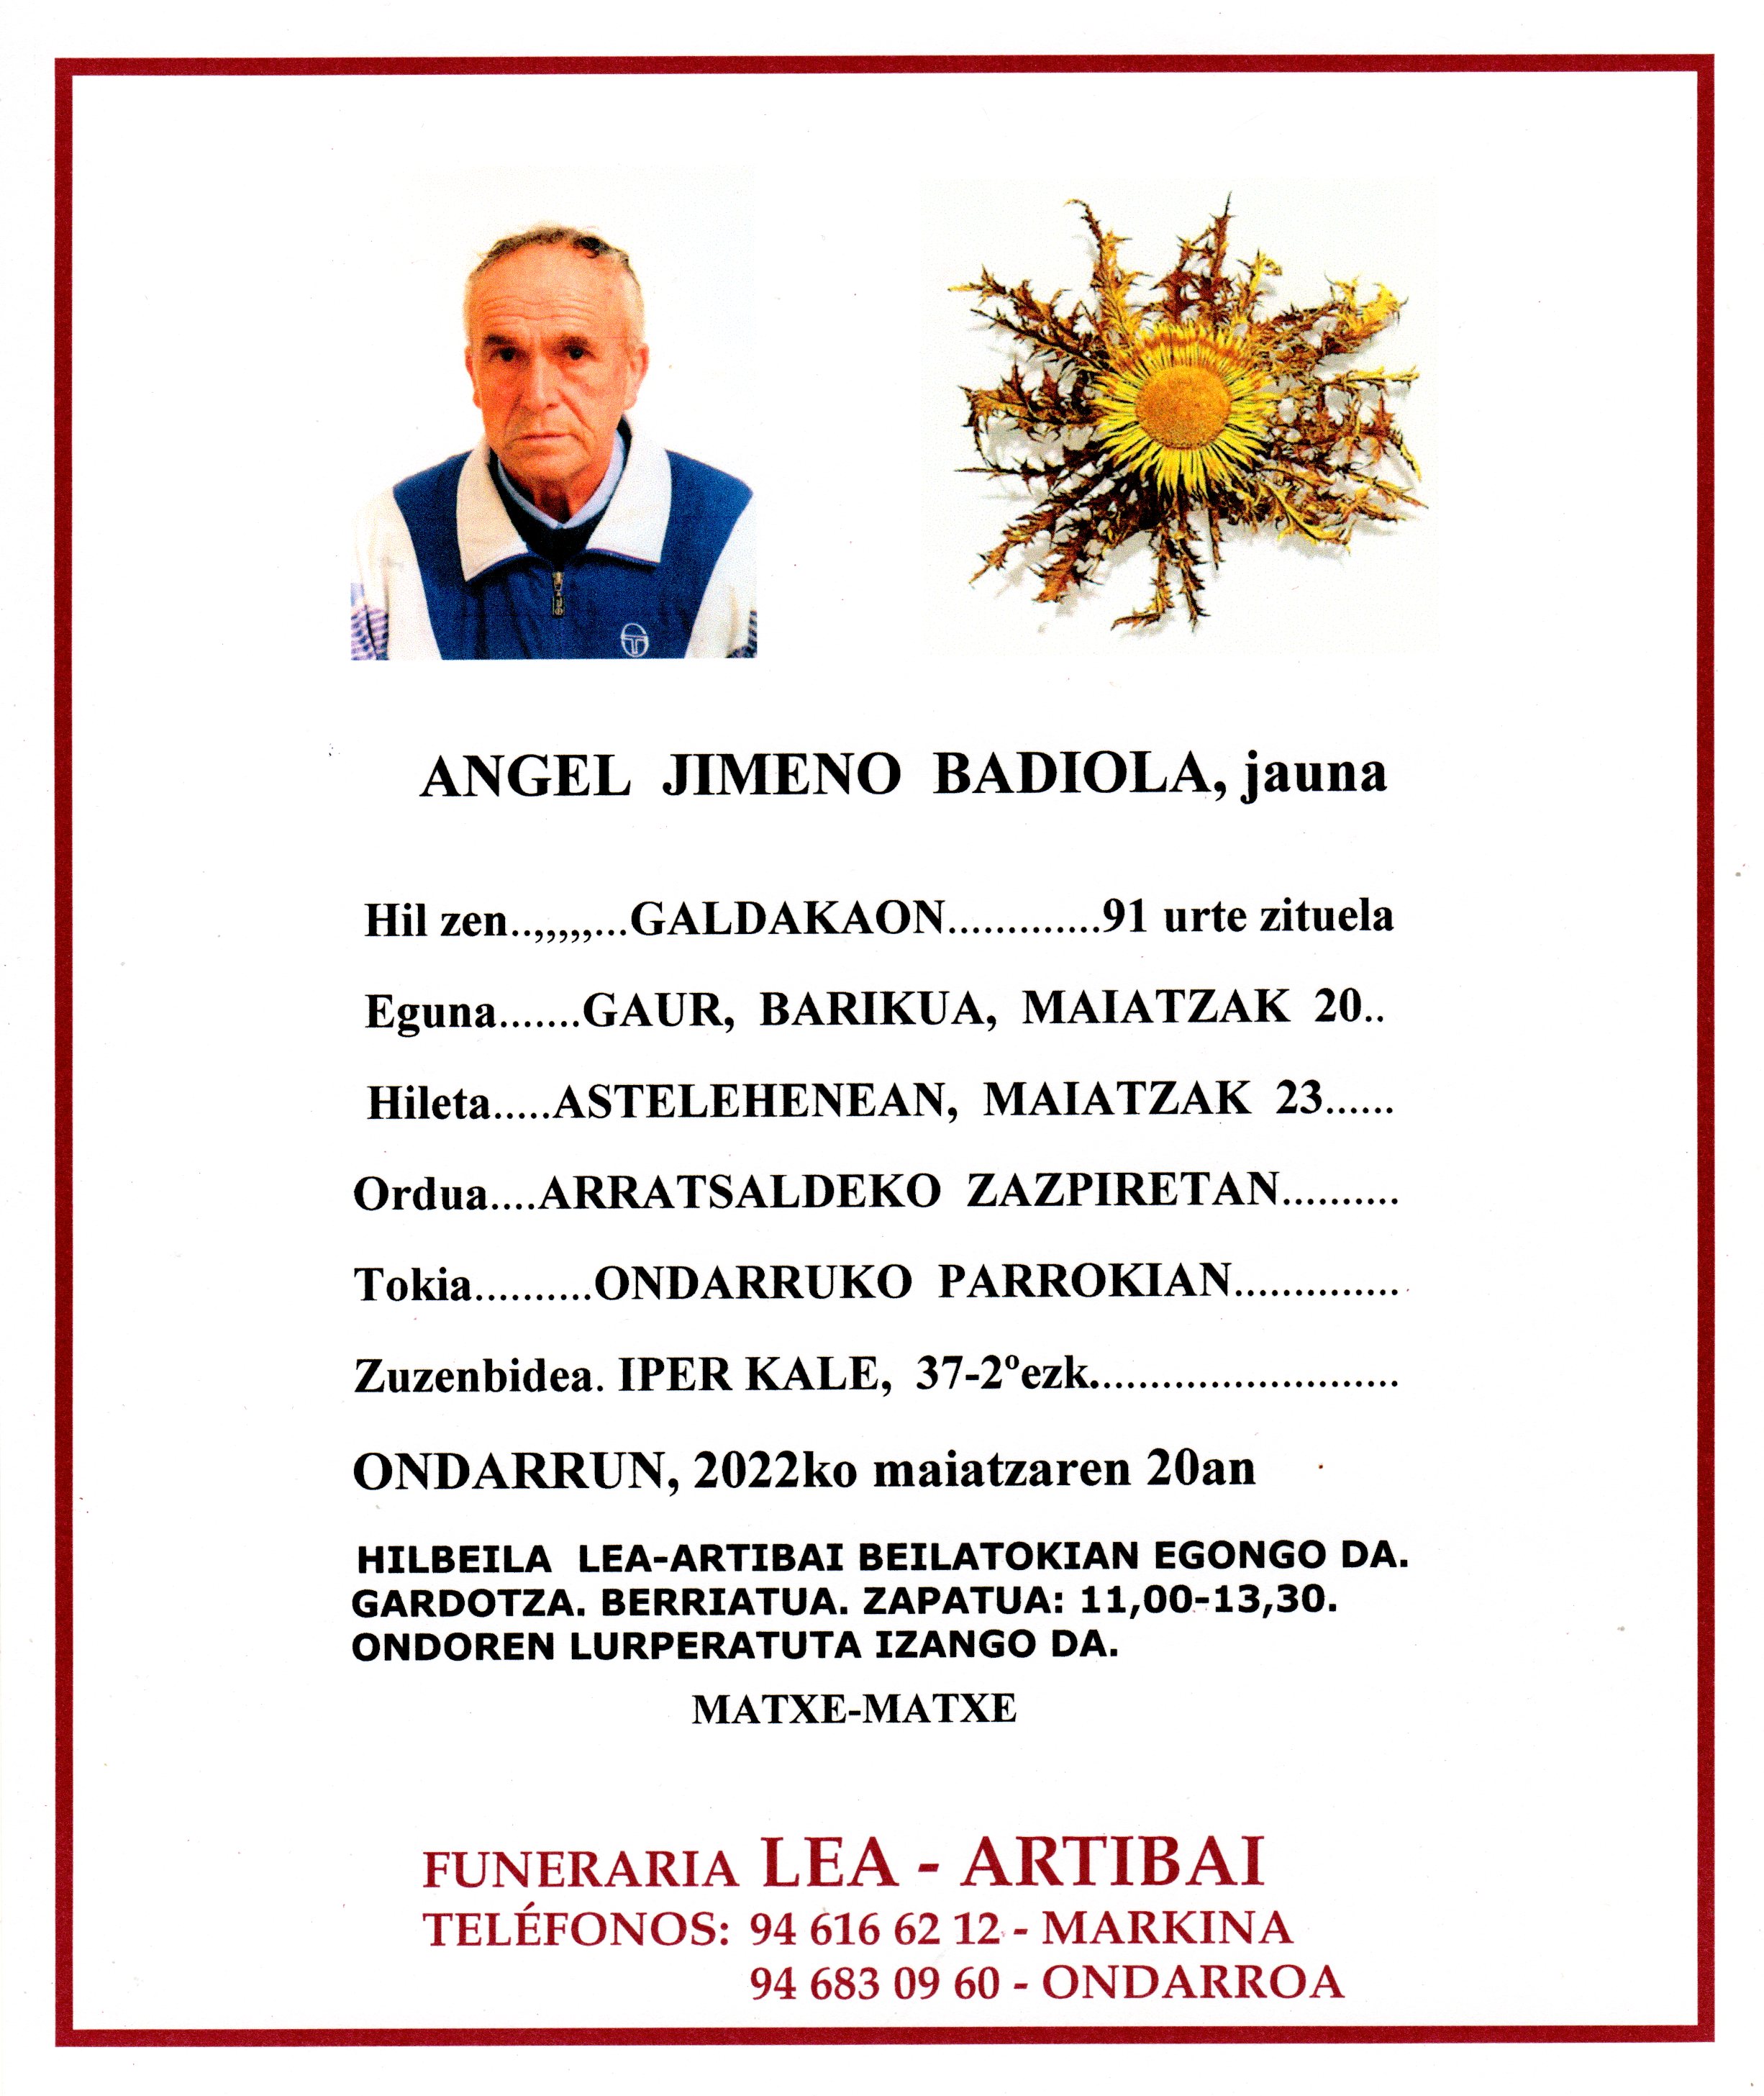 Angel Jimeno Badiola